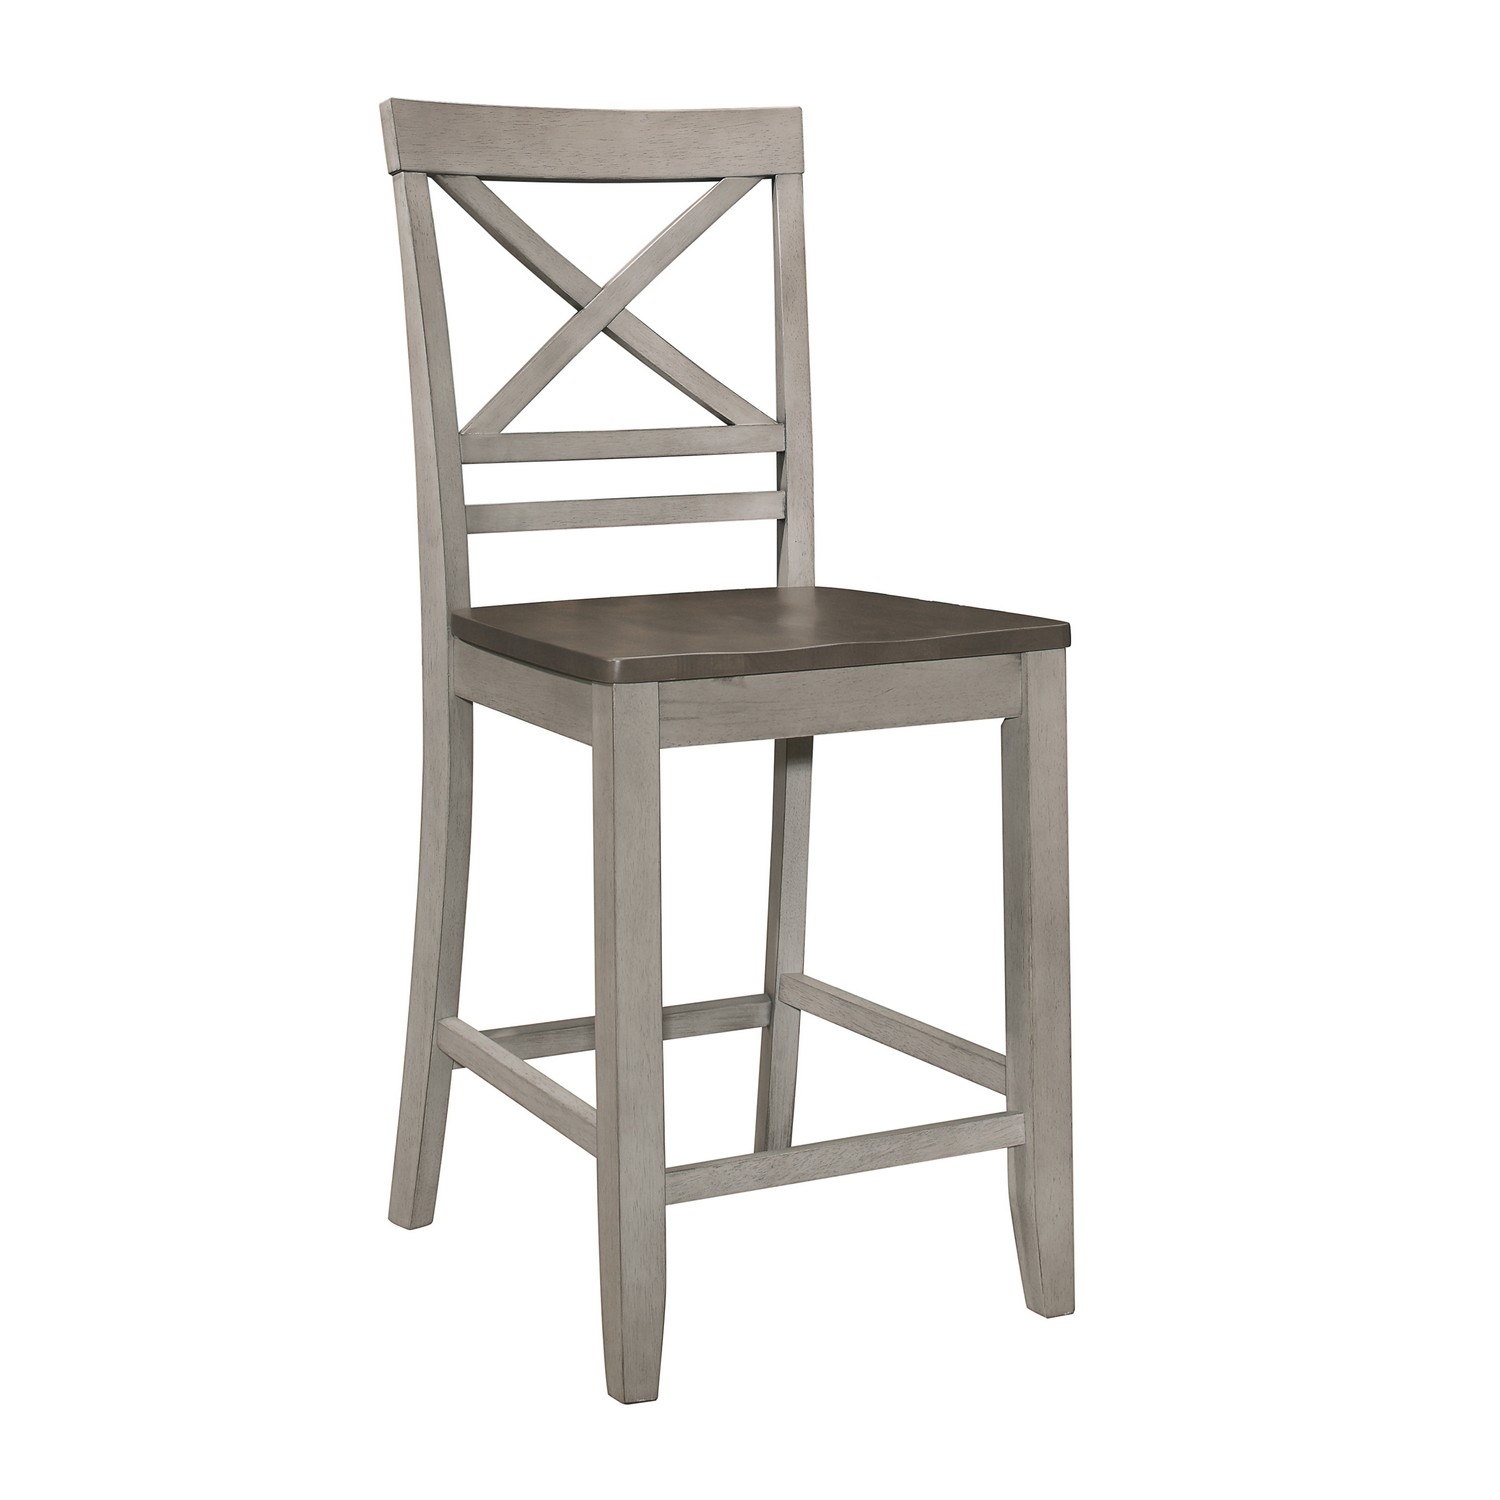 Homelegance Brightleaf Counter Height Chair - Brown/Light Gray